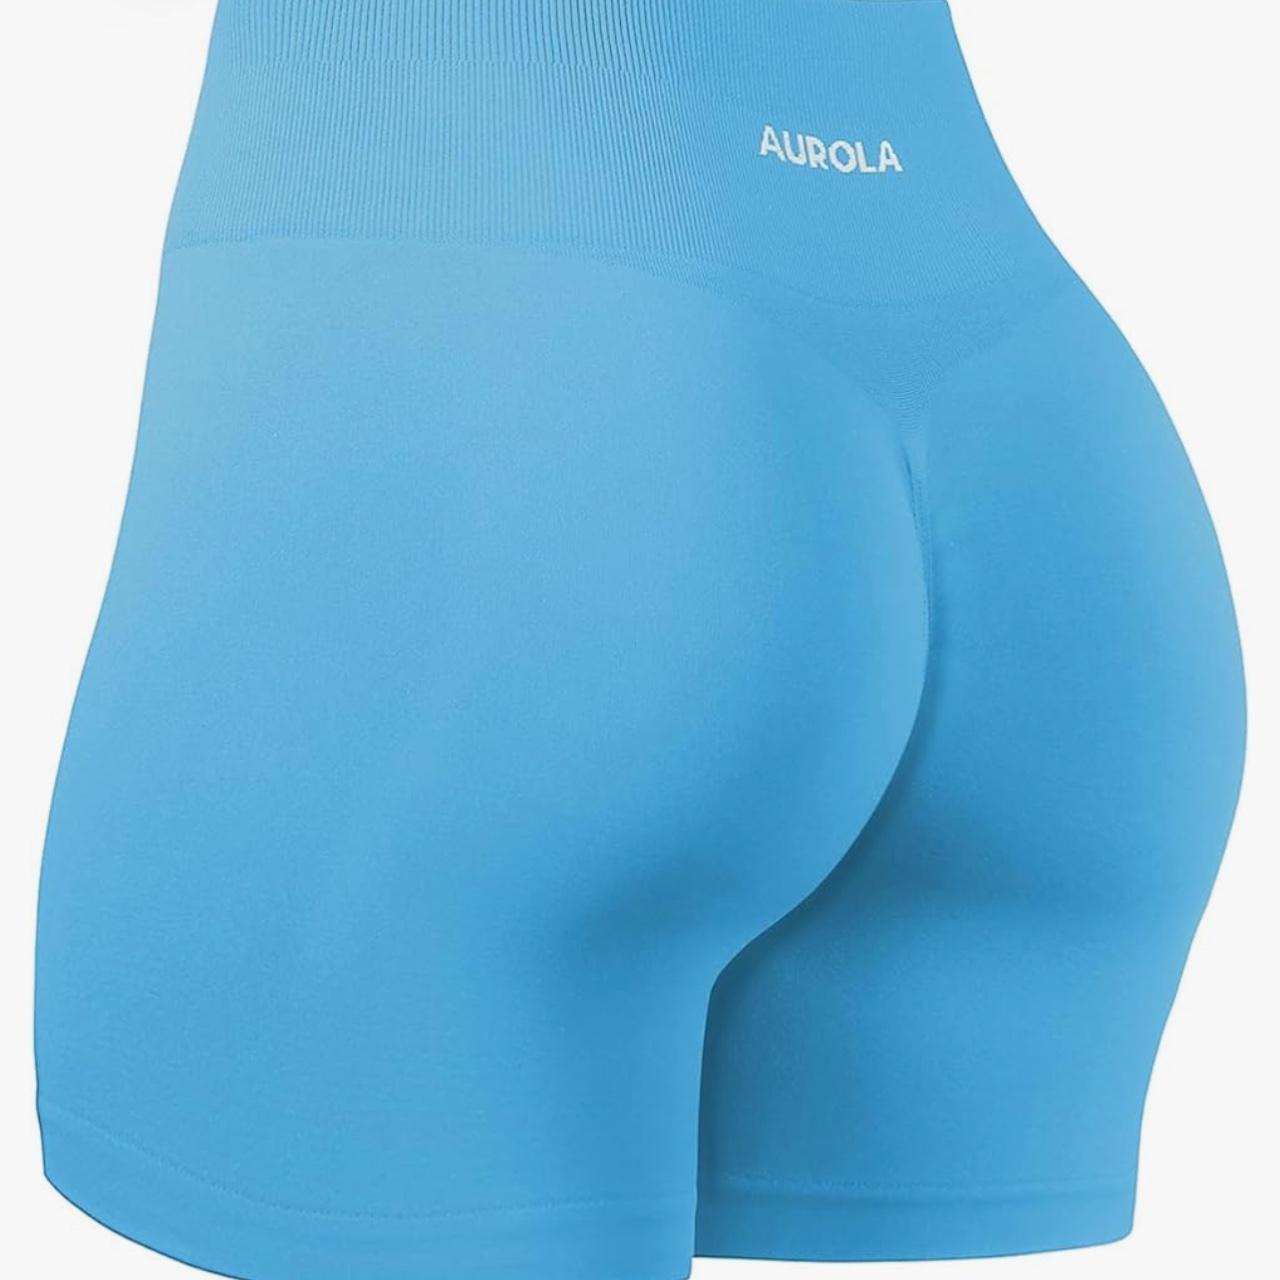 AUROLA Dream Collection Workout Shorts for Women - Depop